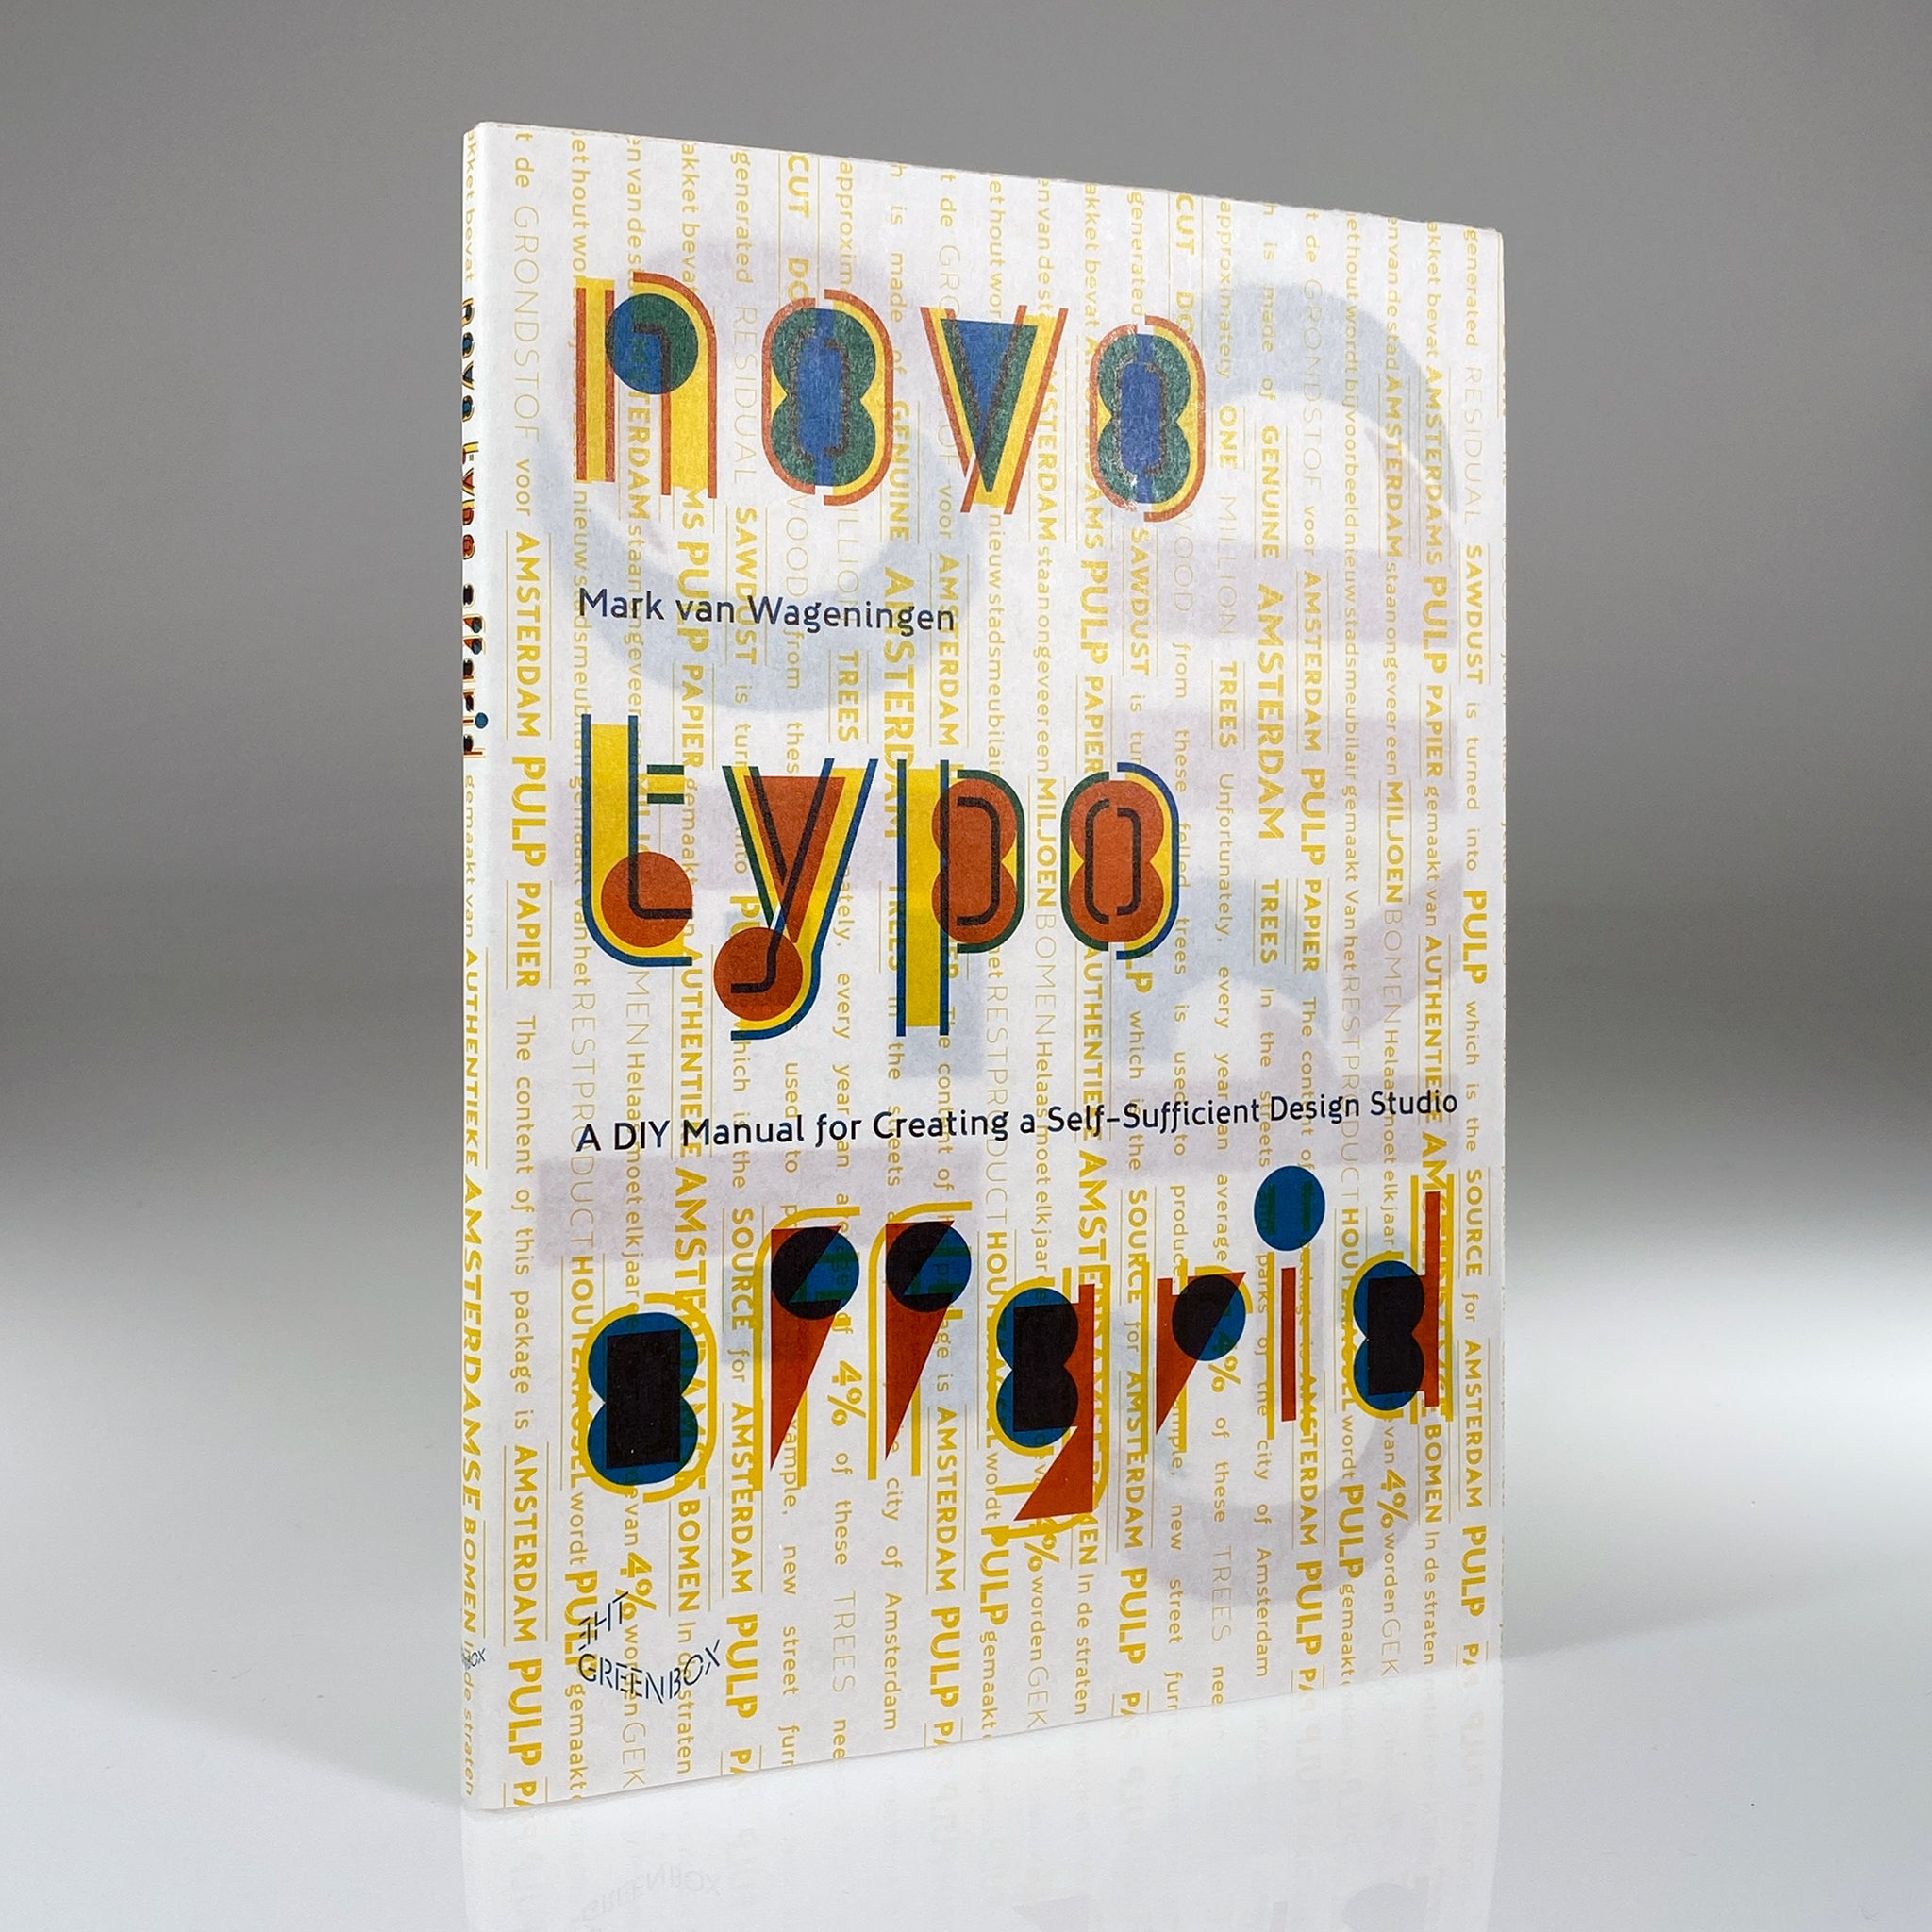 Novo Typo Offgrid: A DIY Manual for Creating a Self-Sufficient Design Studio